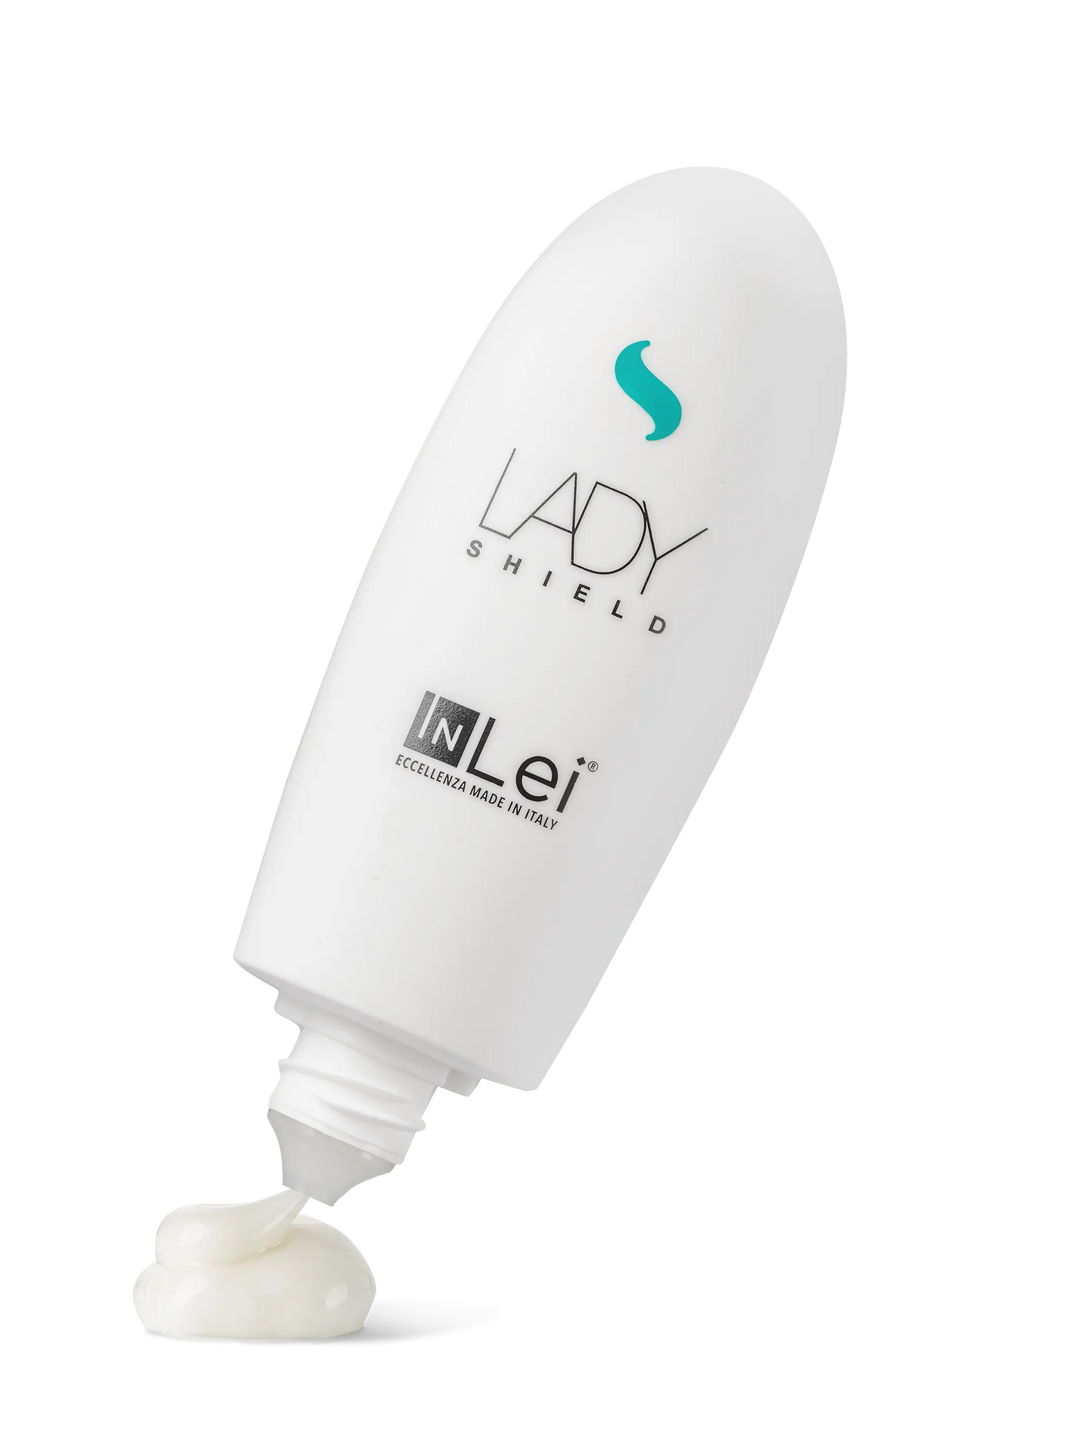 LADY SHIELD | protective eyebrow contour cream